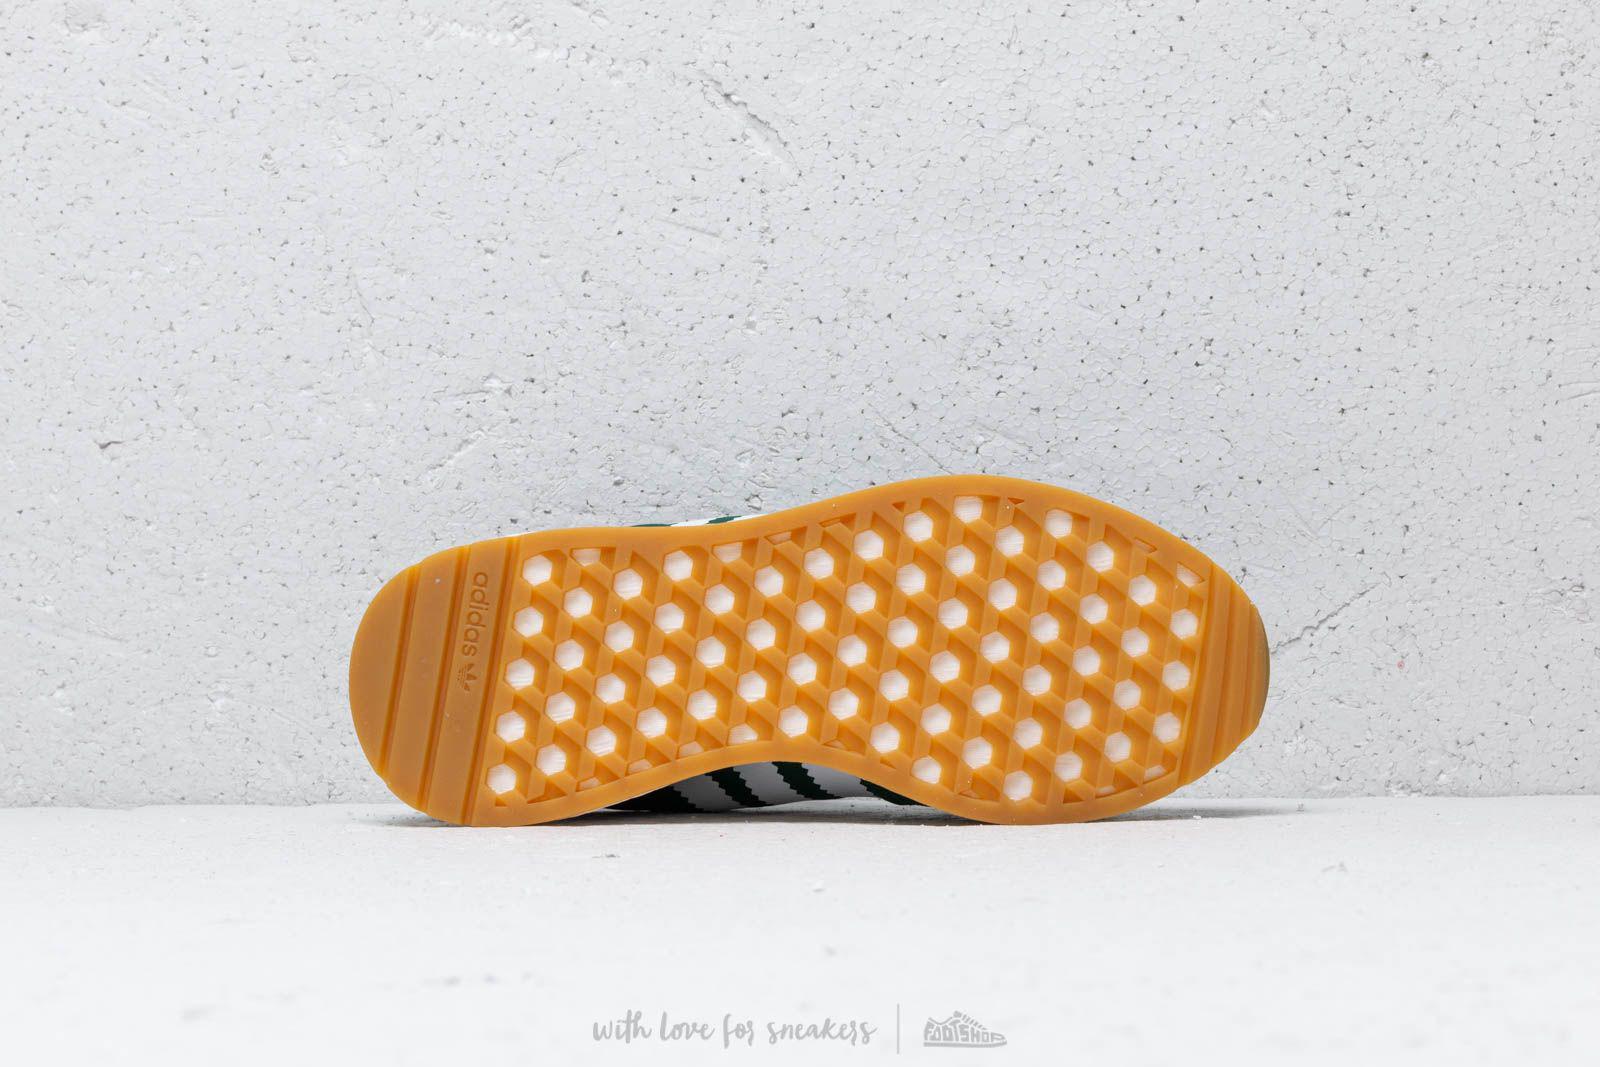 Footshop Adidas I-5923 W Collegiate Green/ Cloud White/ Gum | Lyst